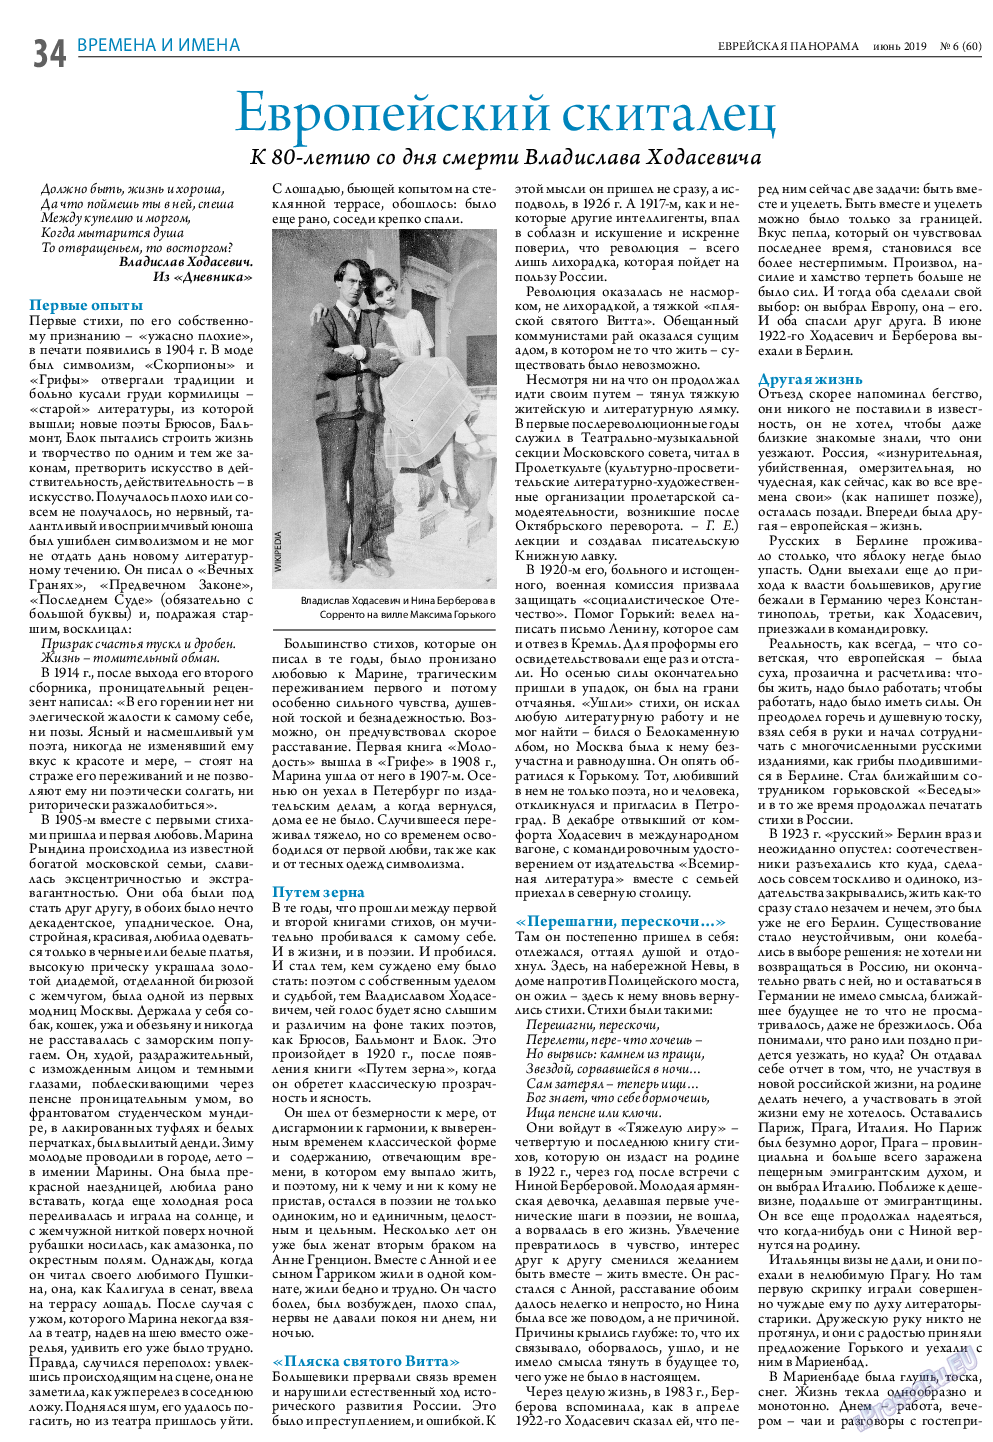 Еврейская панорама, газета. 2019 №6 стр.34